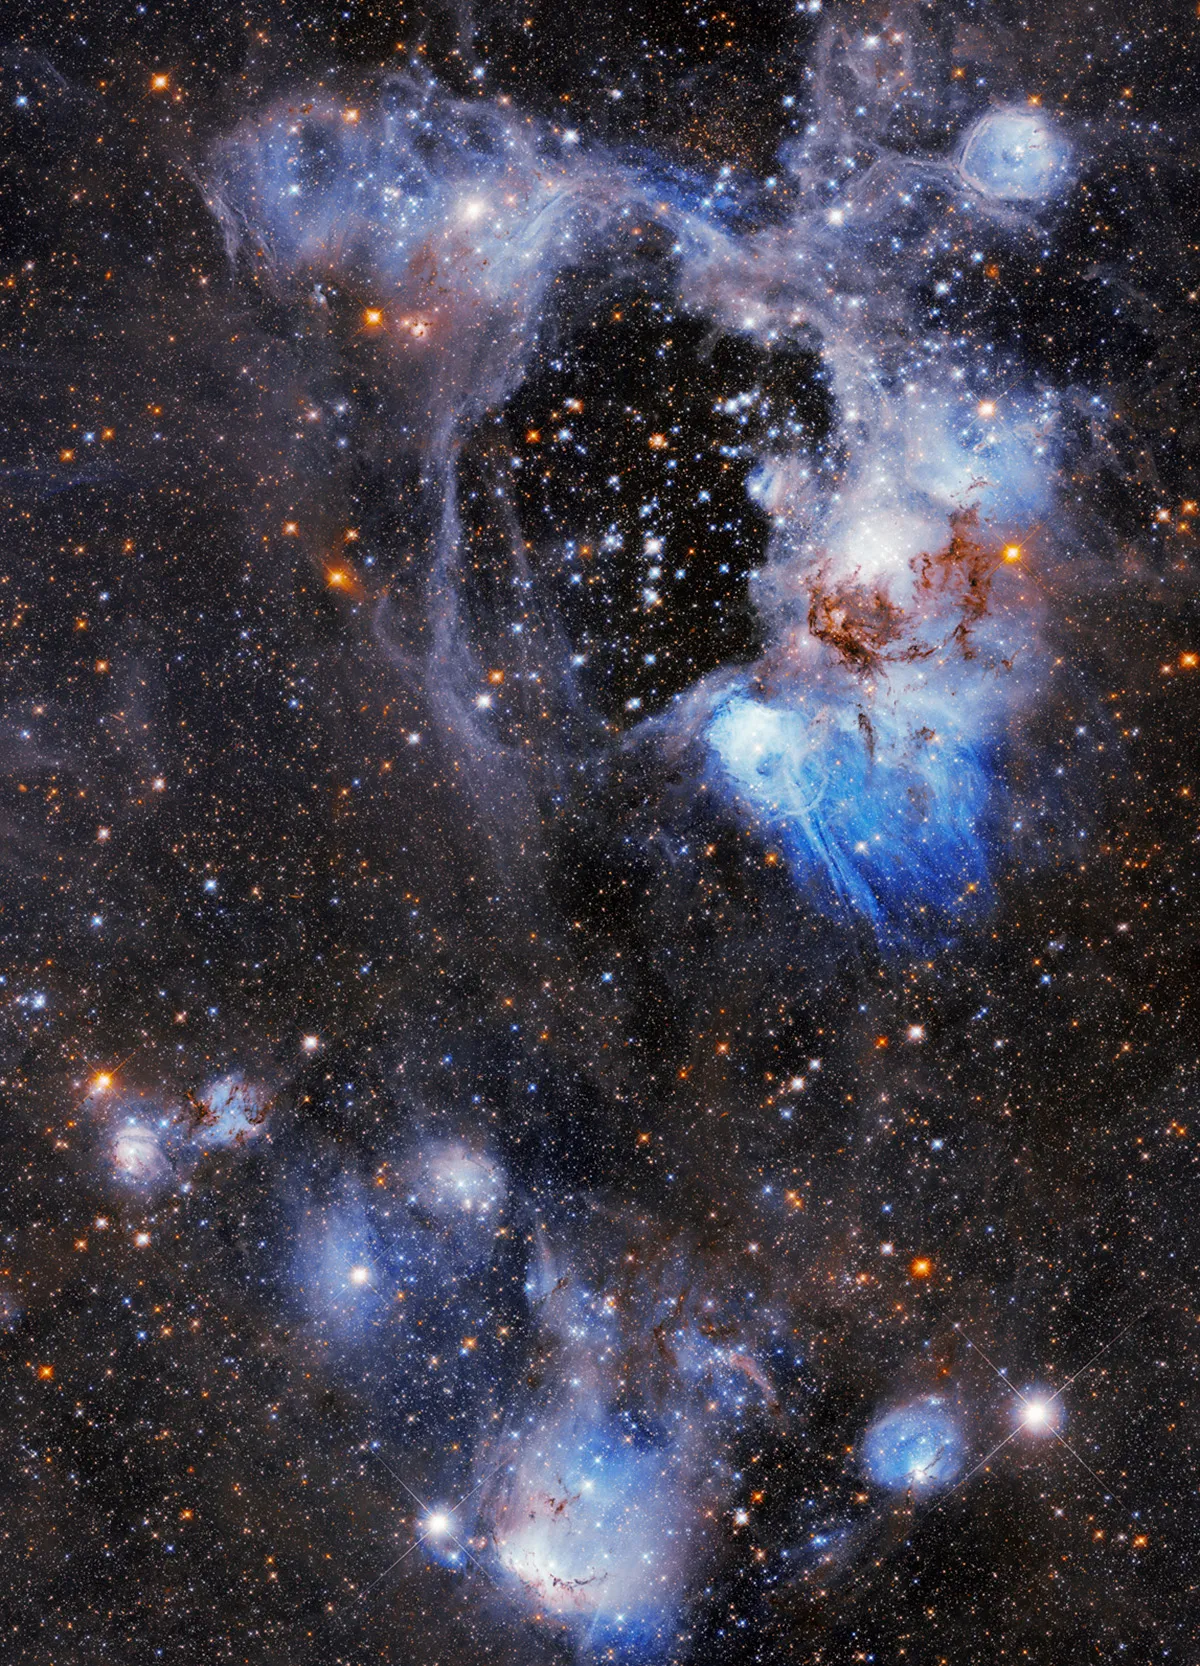 Photo by NASA/Hubble Space Telescope